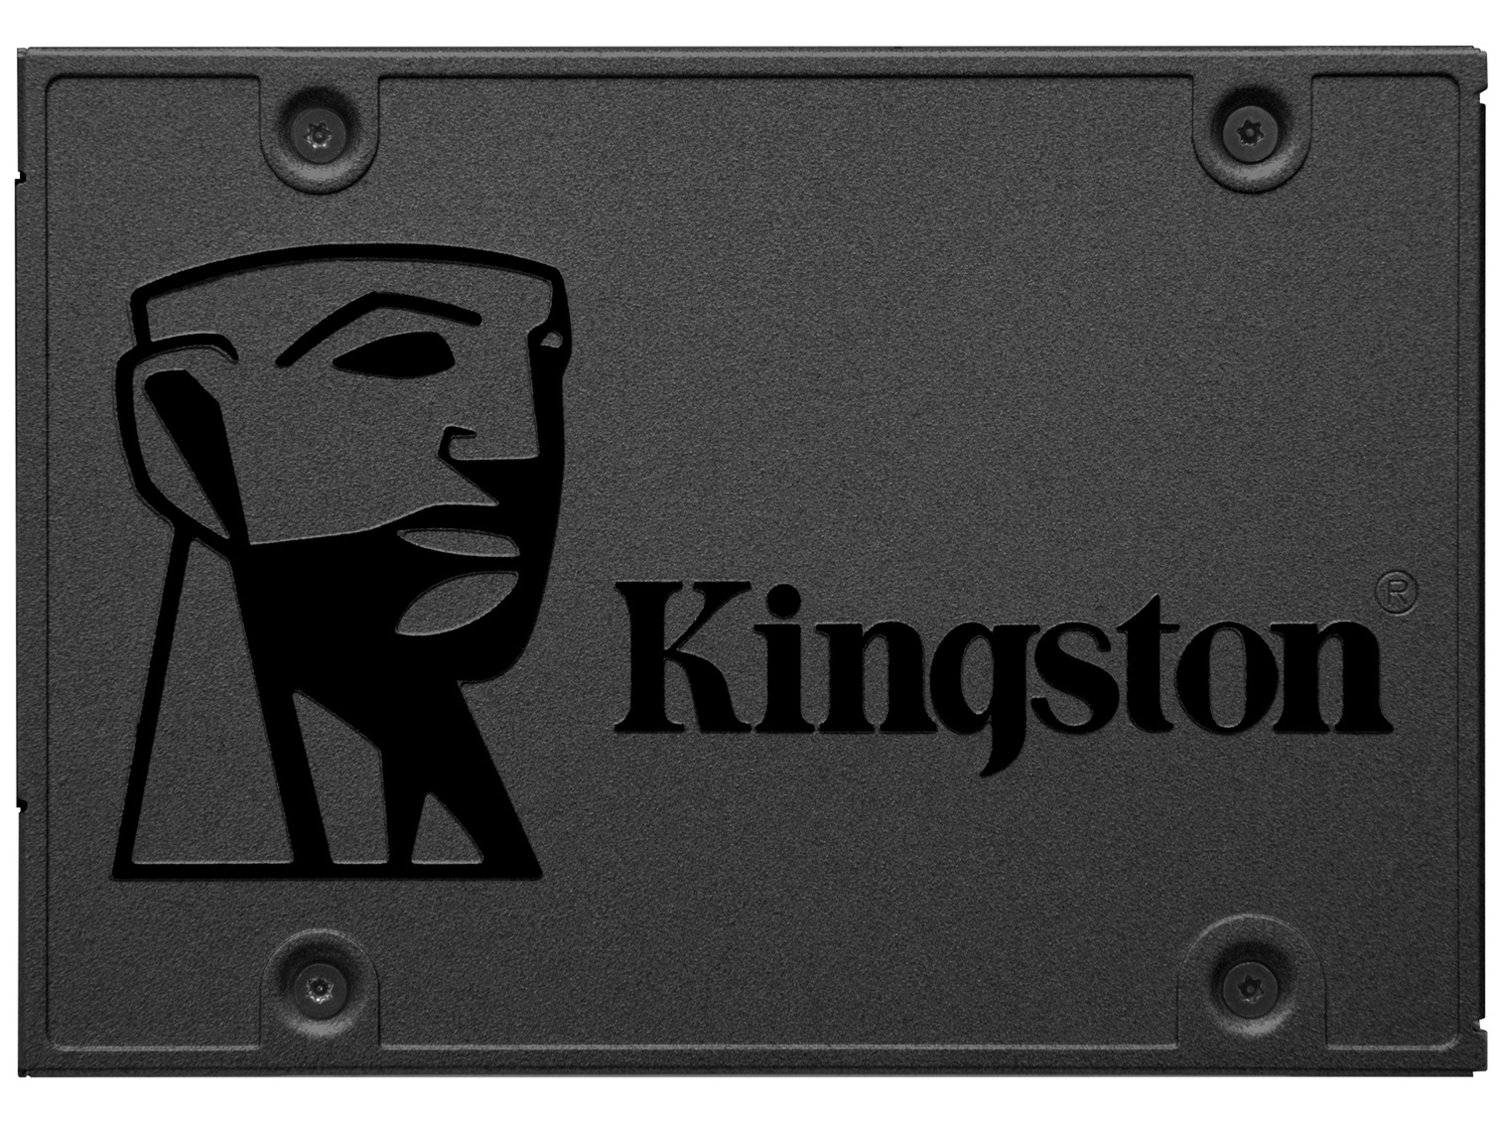 SSD Kingston 240GB Sata Rev. 3.0 - Leituras 500MB/s e Gravações 350MB/s A400 - 2